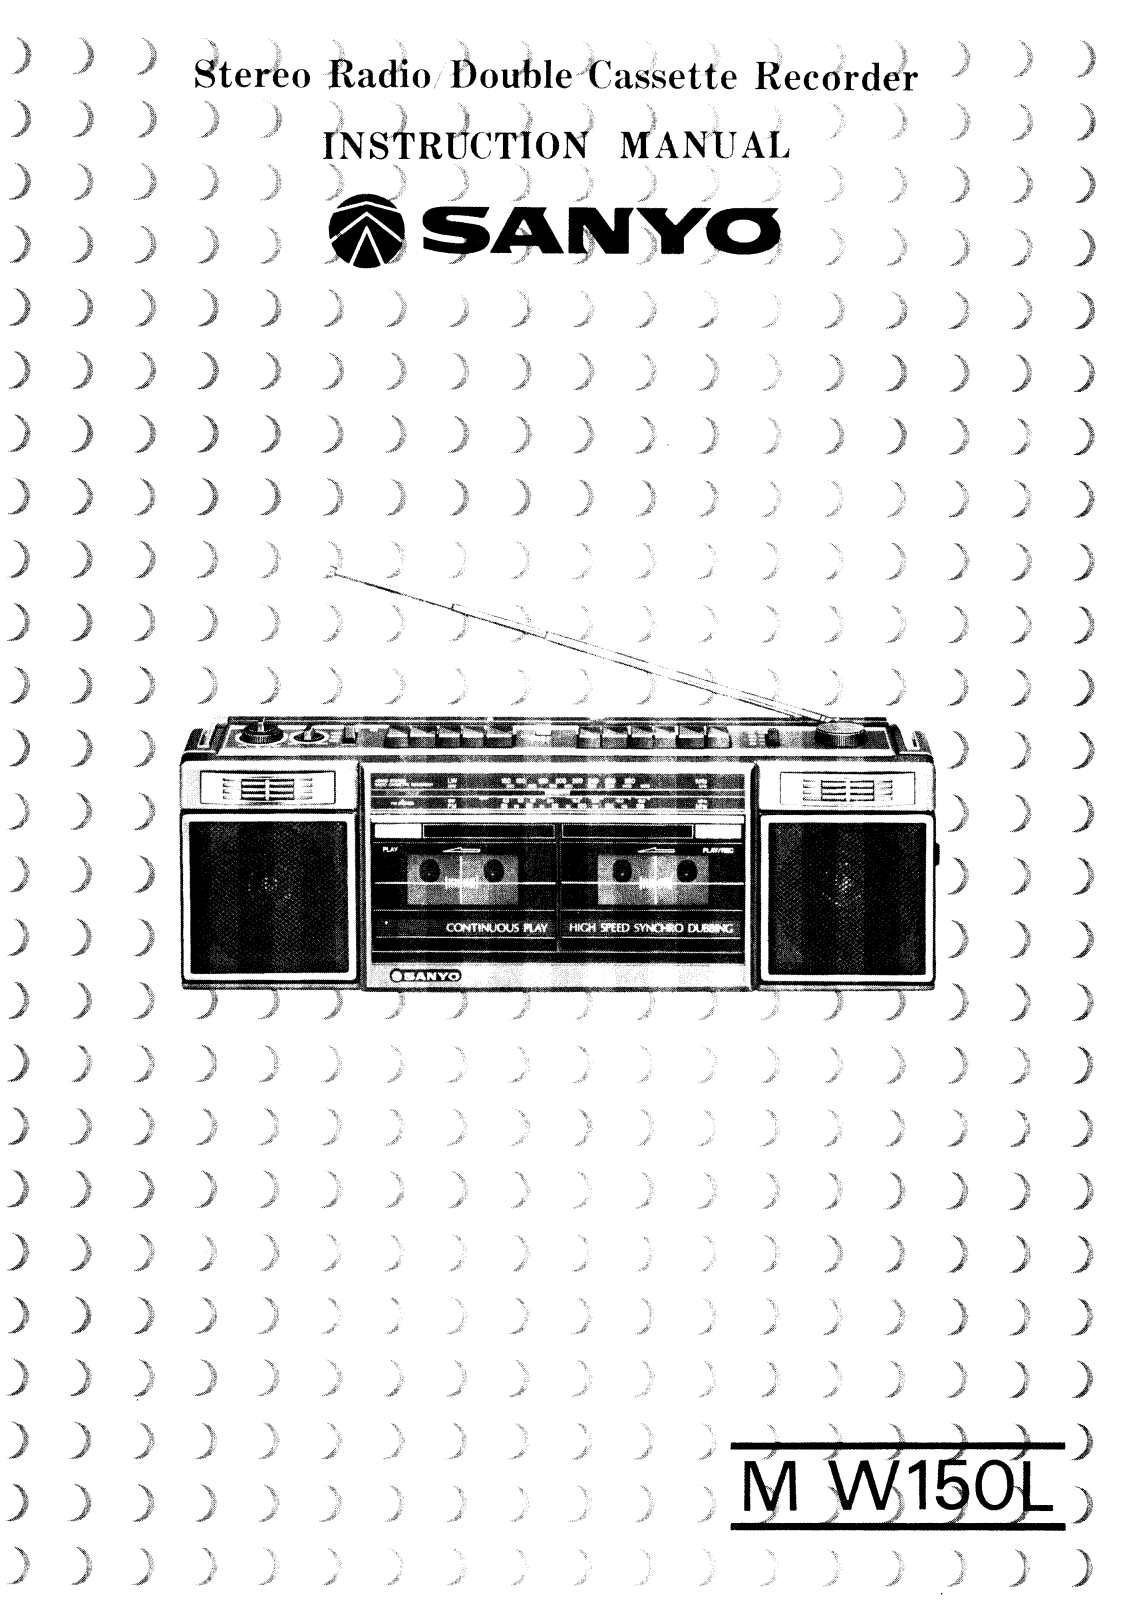 Sanyo M W150L Instruction Manual